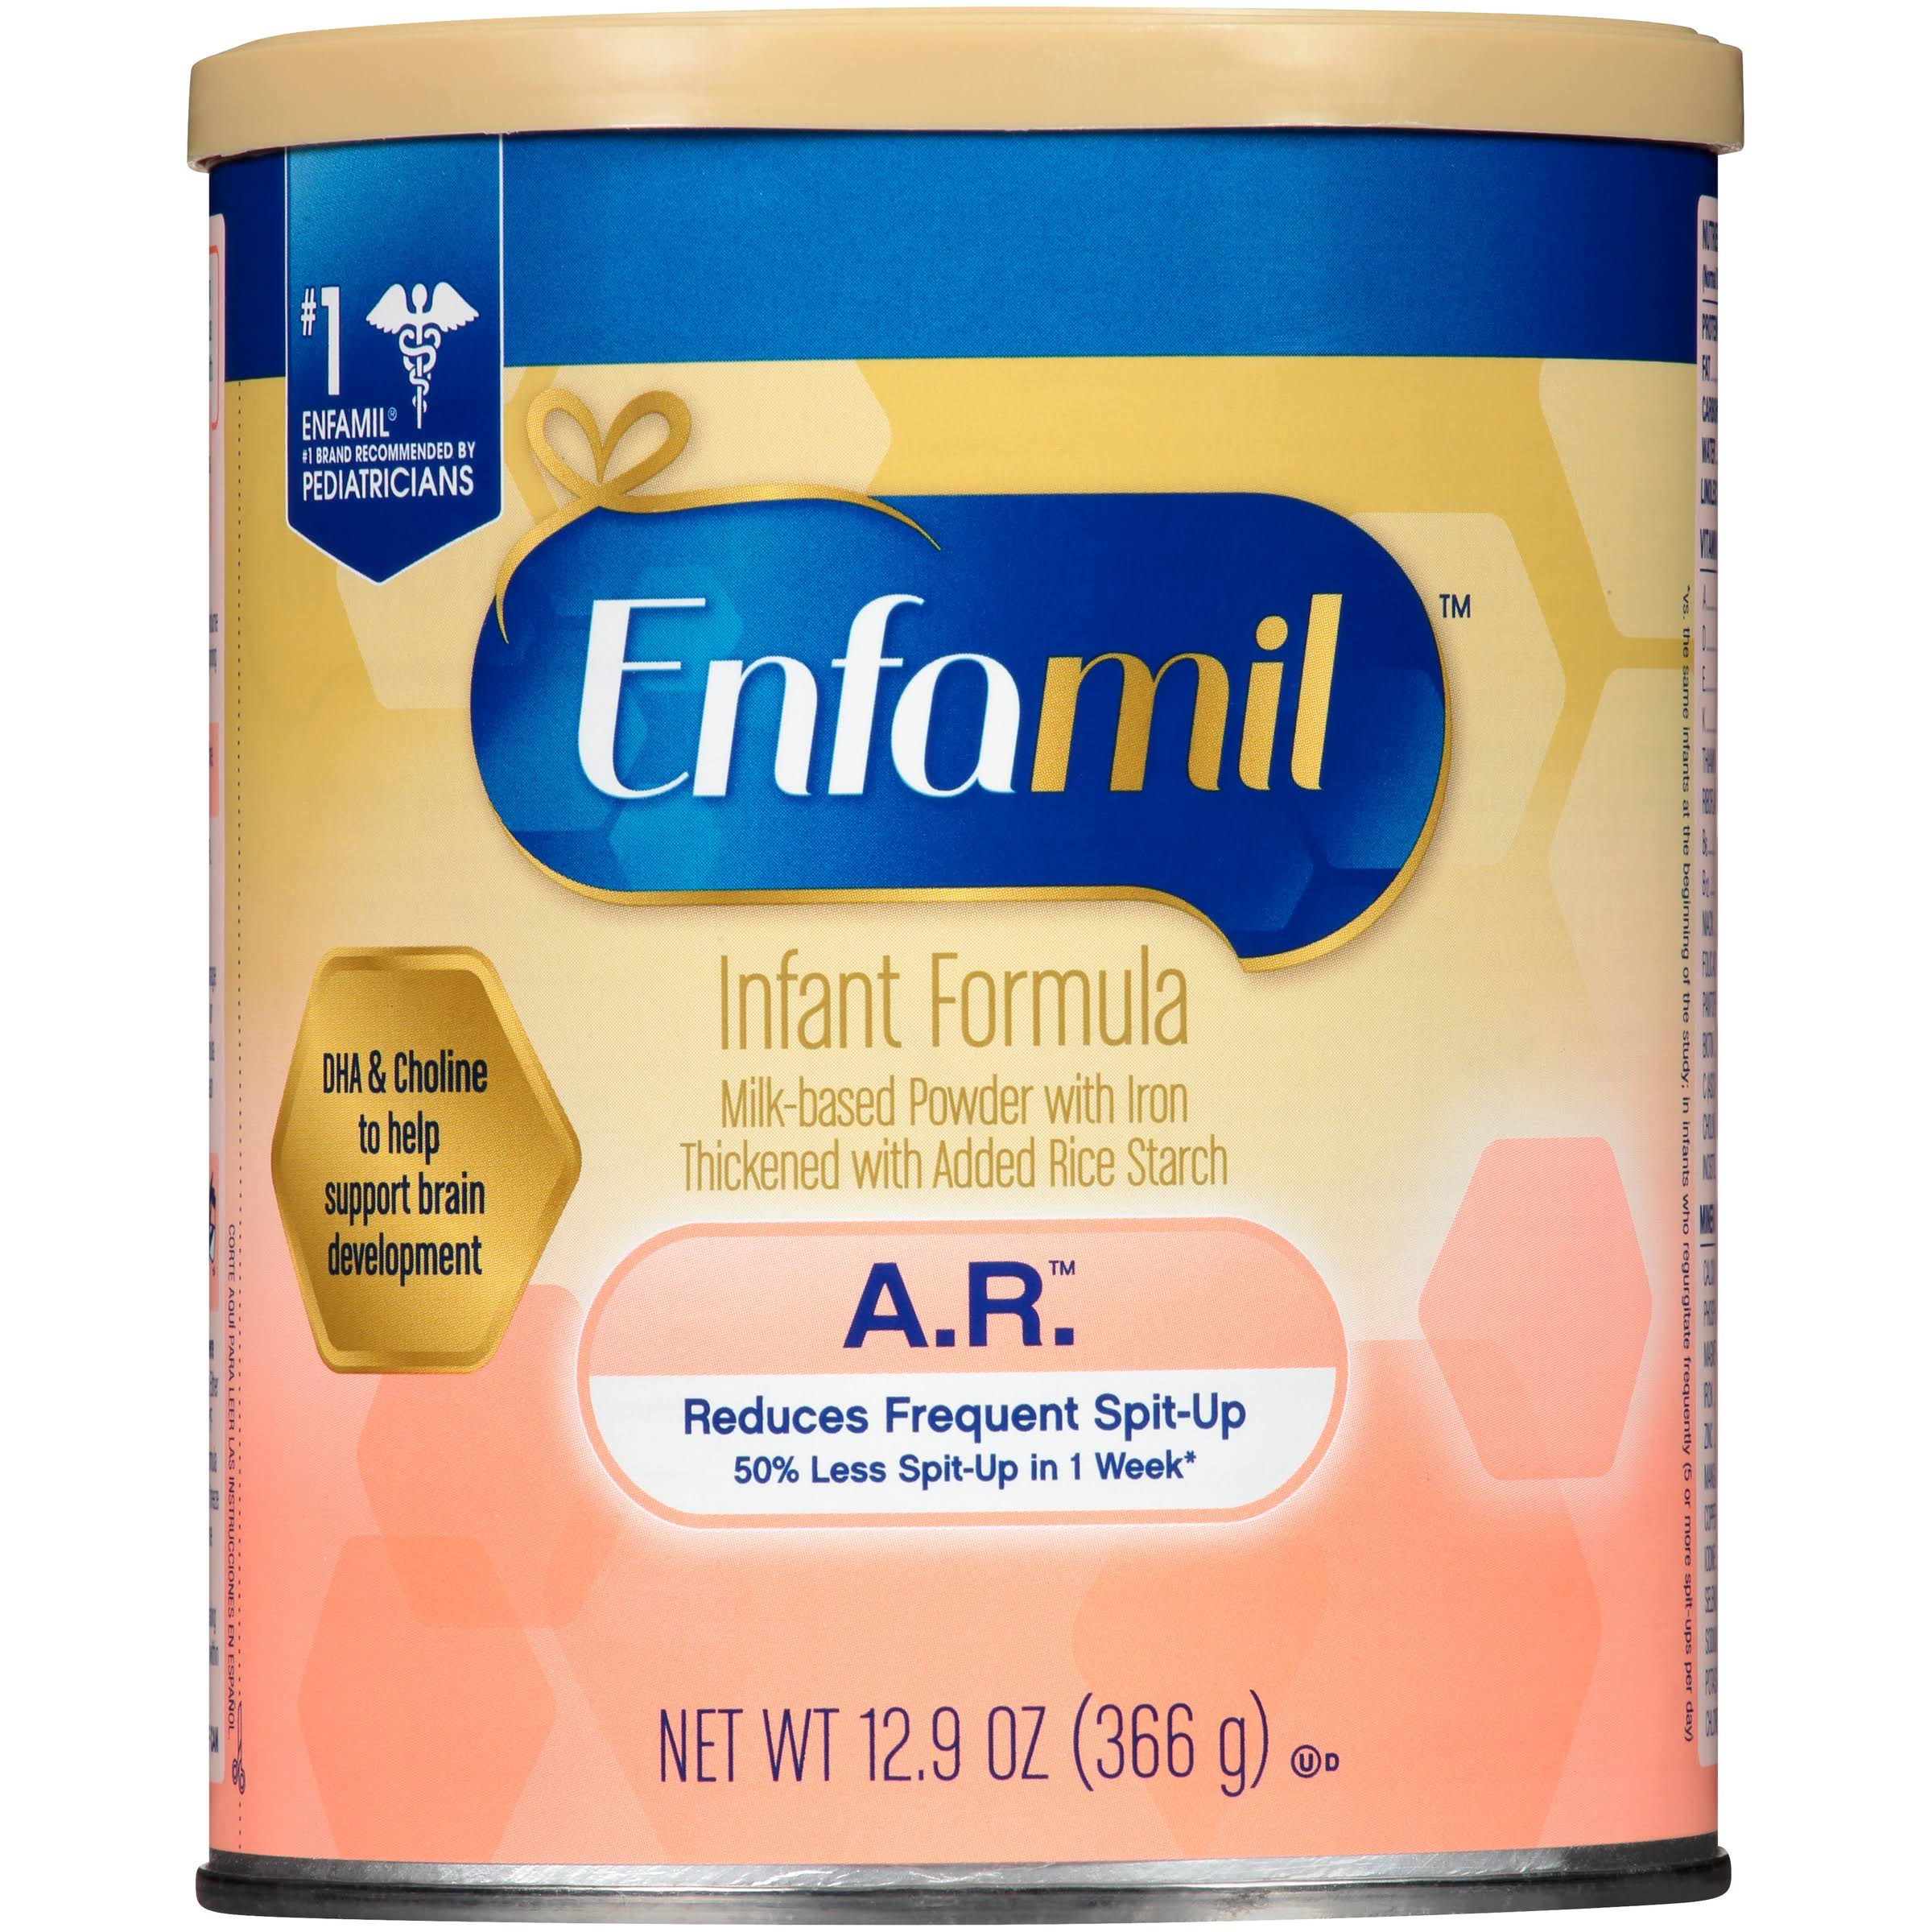 Enfamil Milk-Based Powder Infant Formula - with Iron, Through 12 Months, 12.9oz